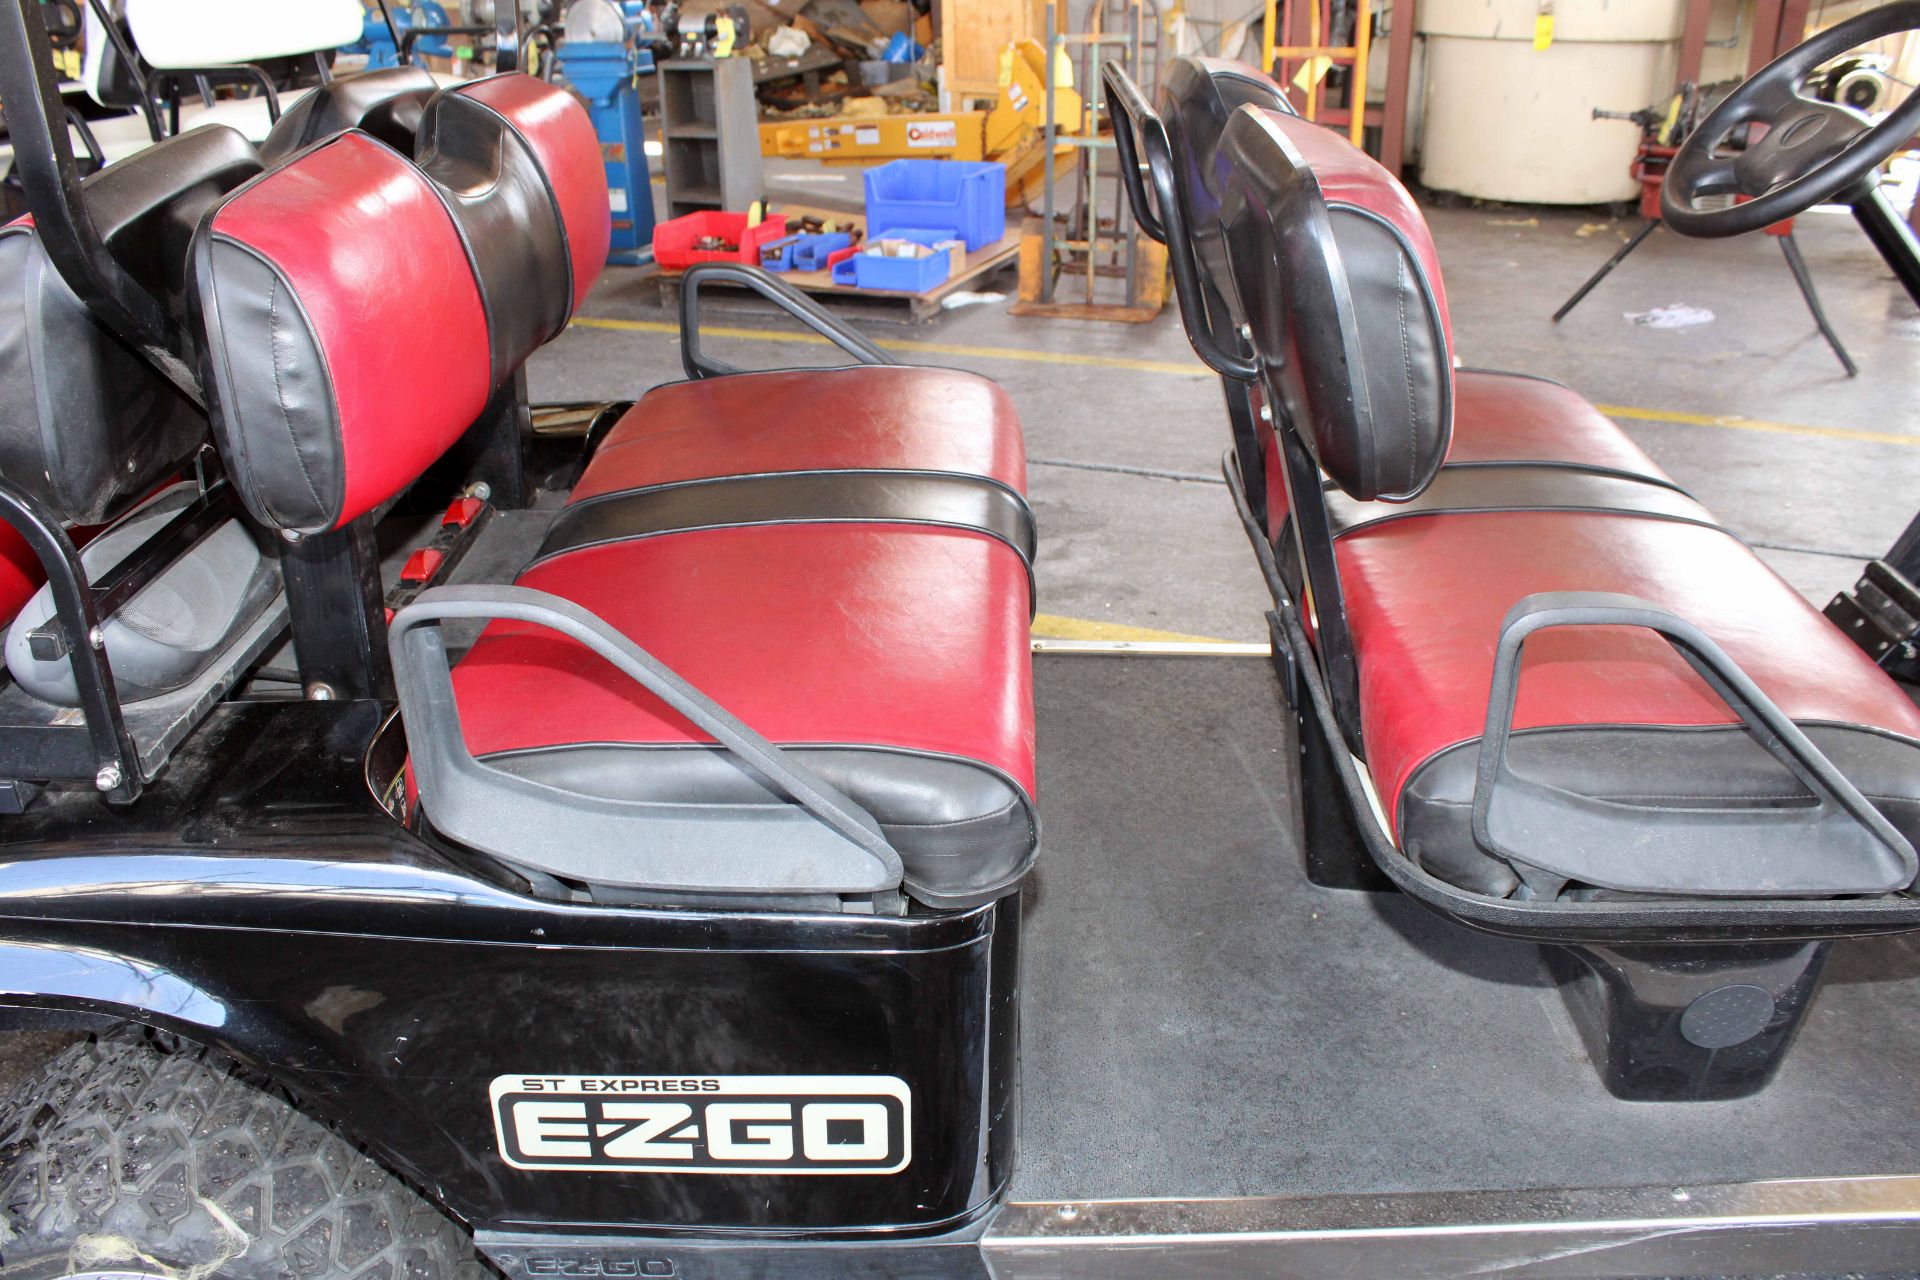 GOLF CART, EZ-GO, ST EXPRESS, gasoline, lift kit, extra wide, tires, (2) dbl. seats, rear platform - Image 8 of 8